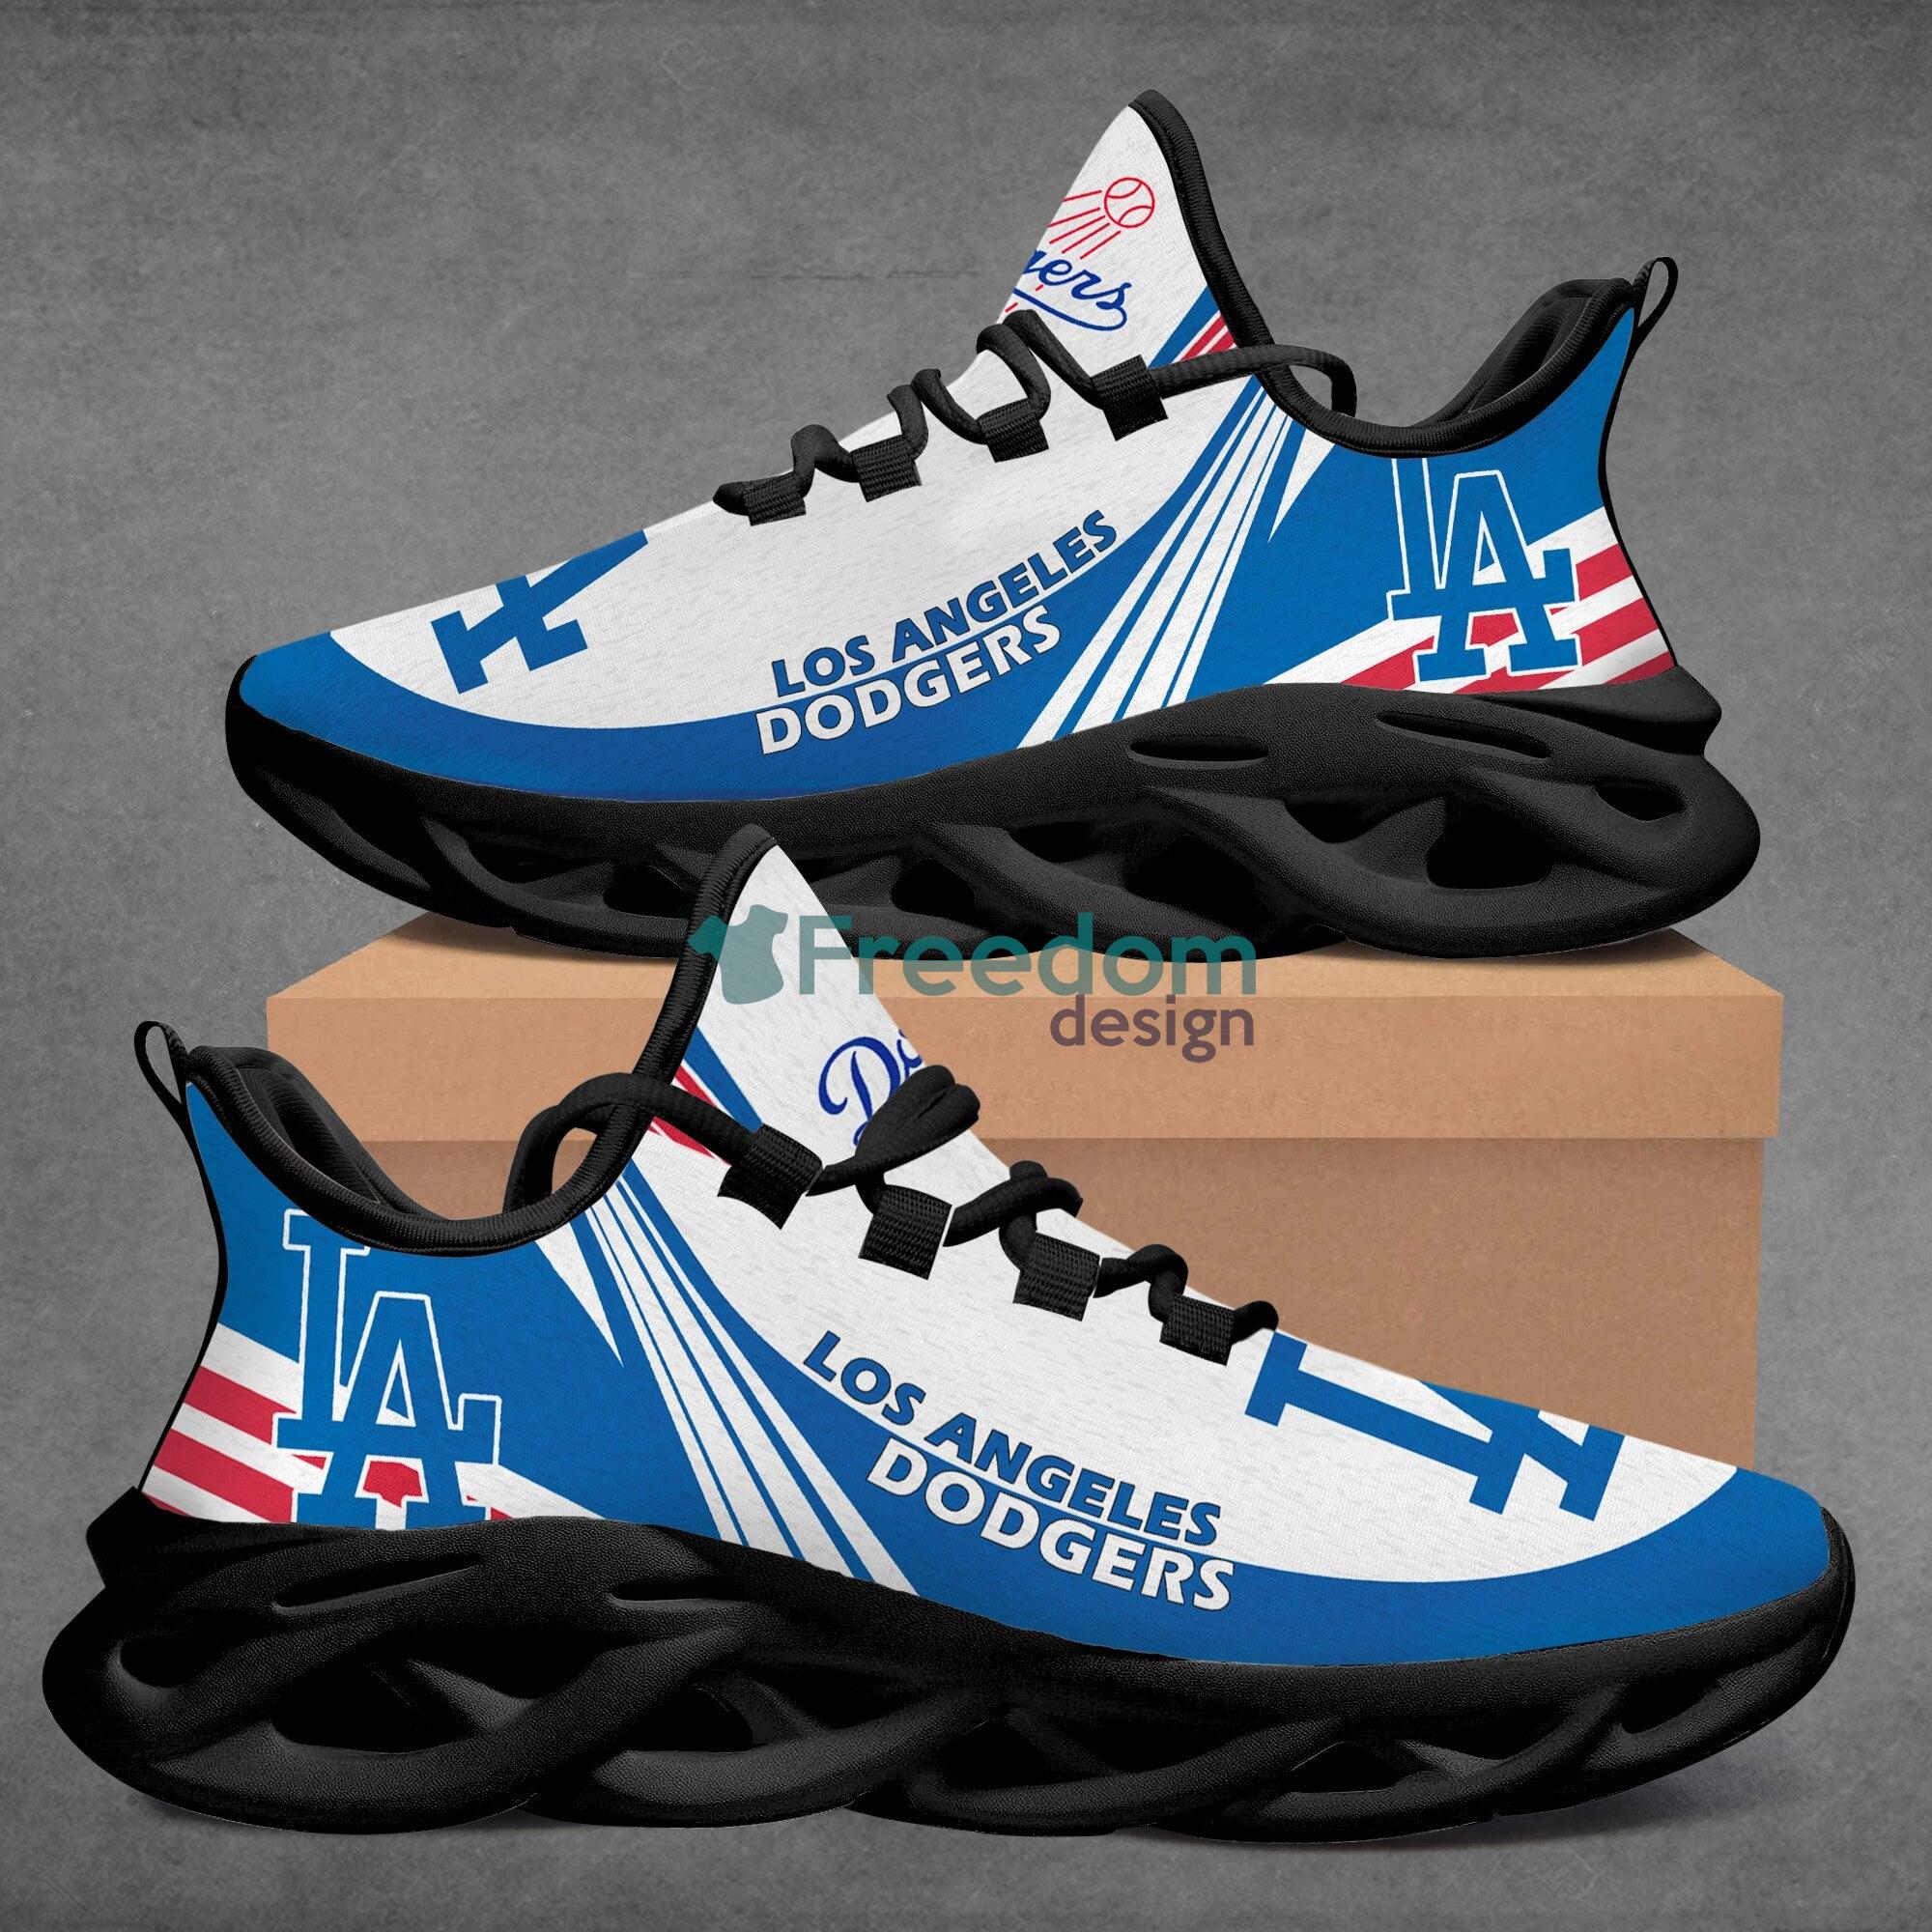 Los Angeles Dodgers Max Soul Snesker Running Shoes - Freedomdesign